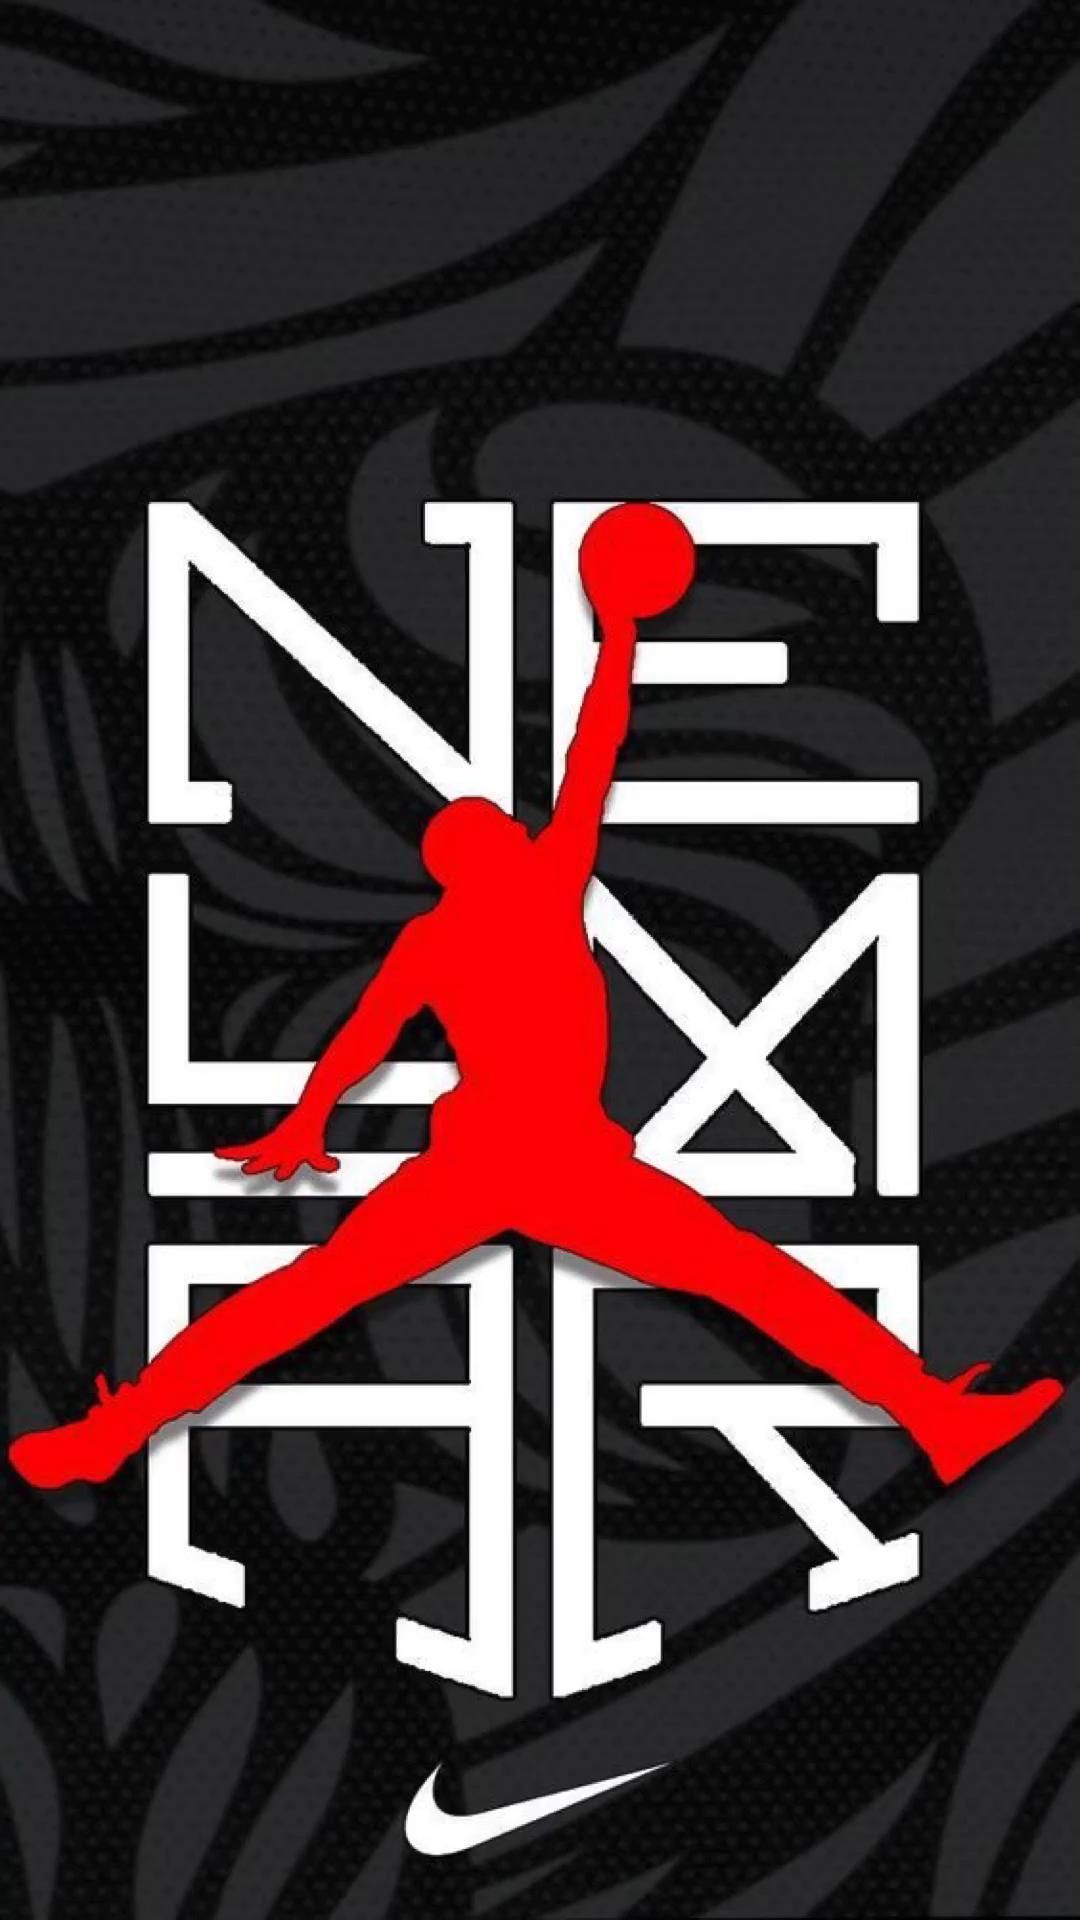 Jordan. Jordan logo wallpaper, Neymar jr wallpaper, Basketball wallpaper